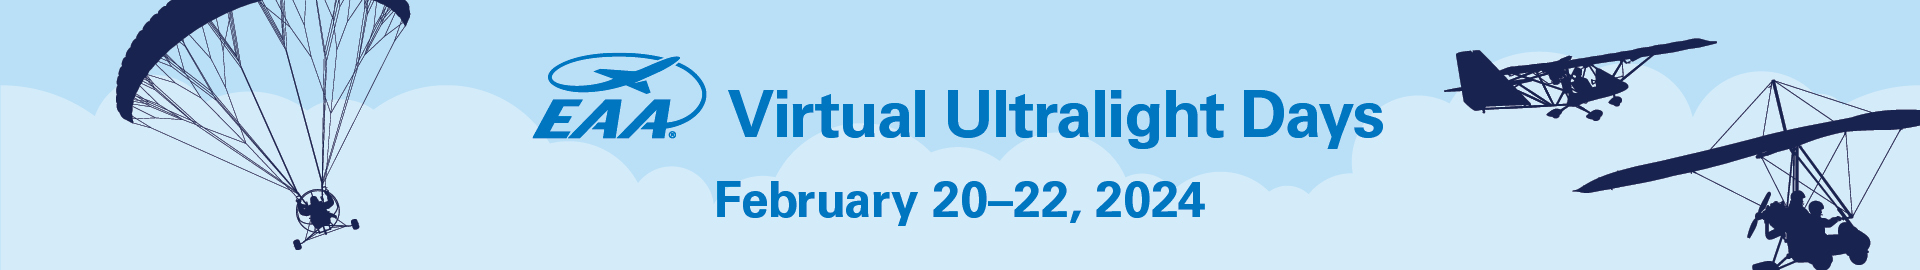  eaa ultralight days february 20 - 22, 2024